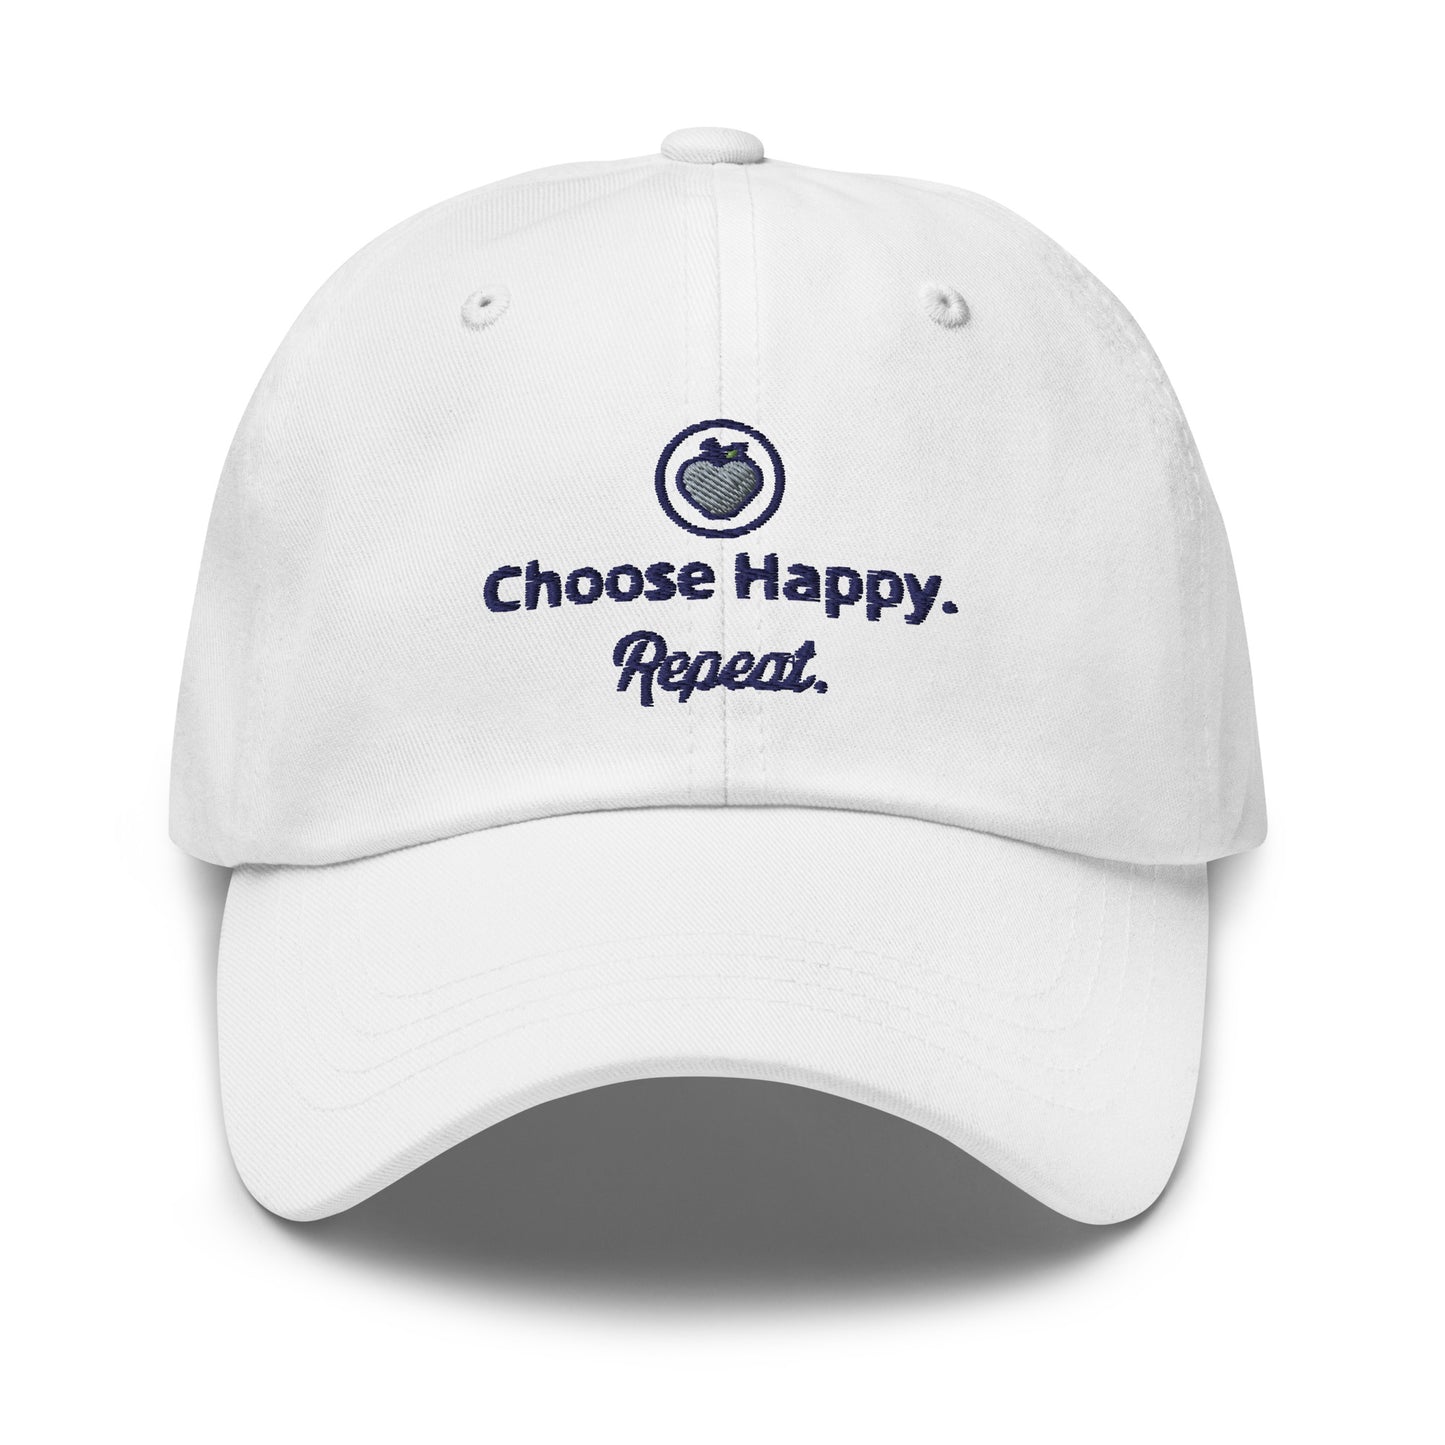 Choose Happy. Repeat. Adjustable Strap Hat